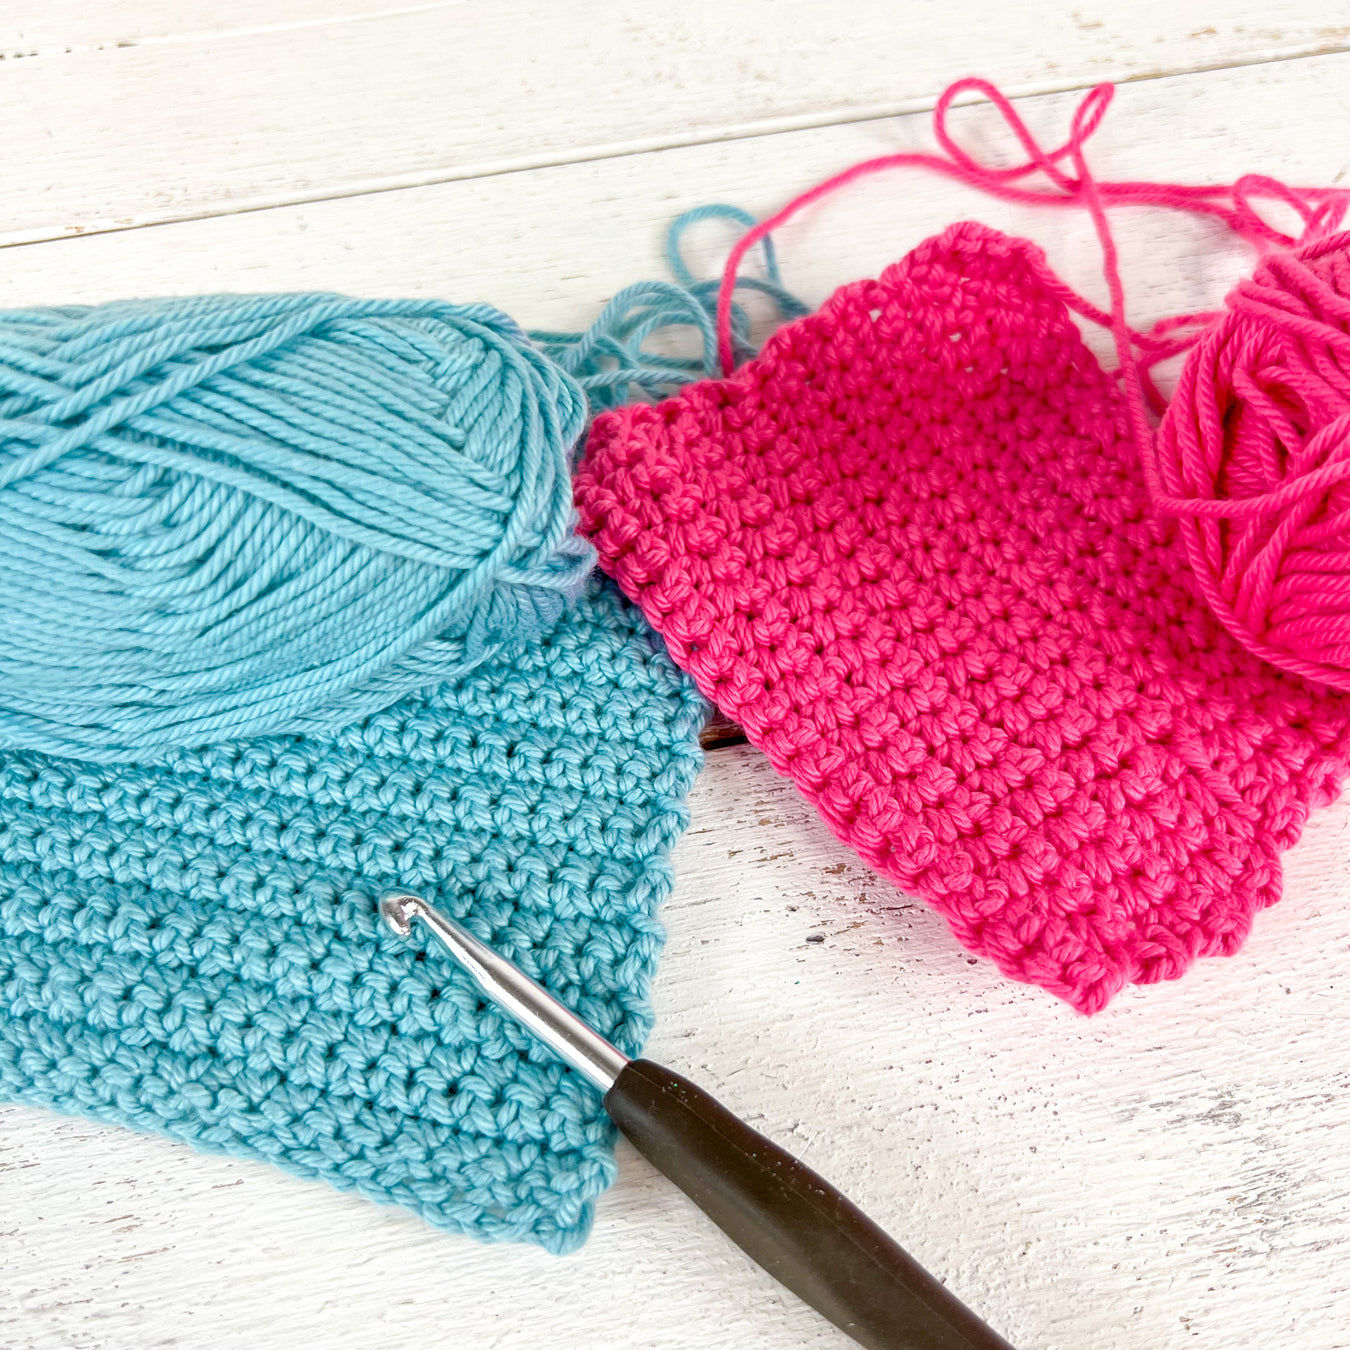 Crochet Thread & Yarn